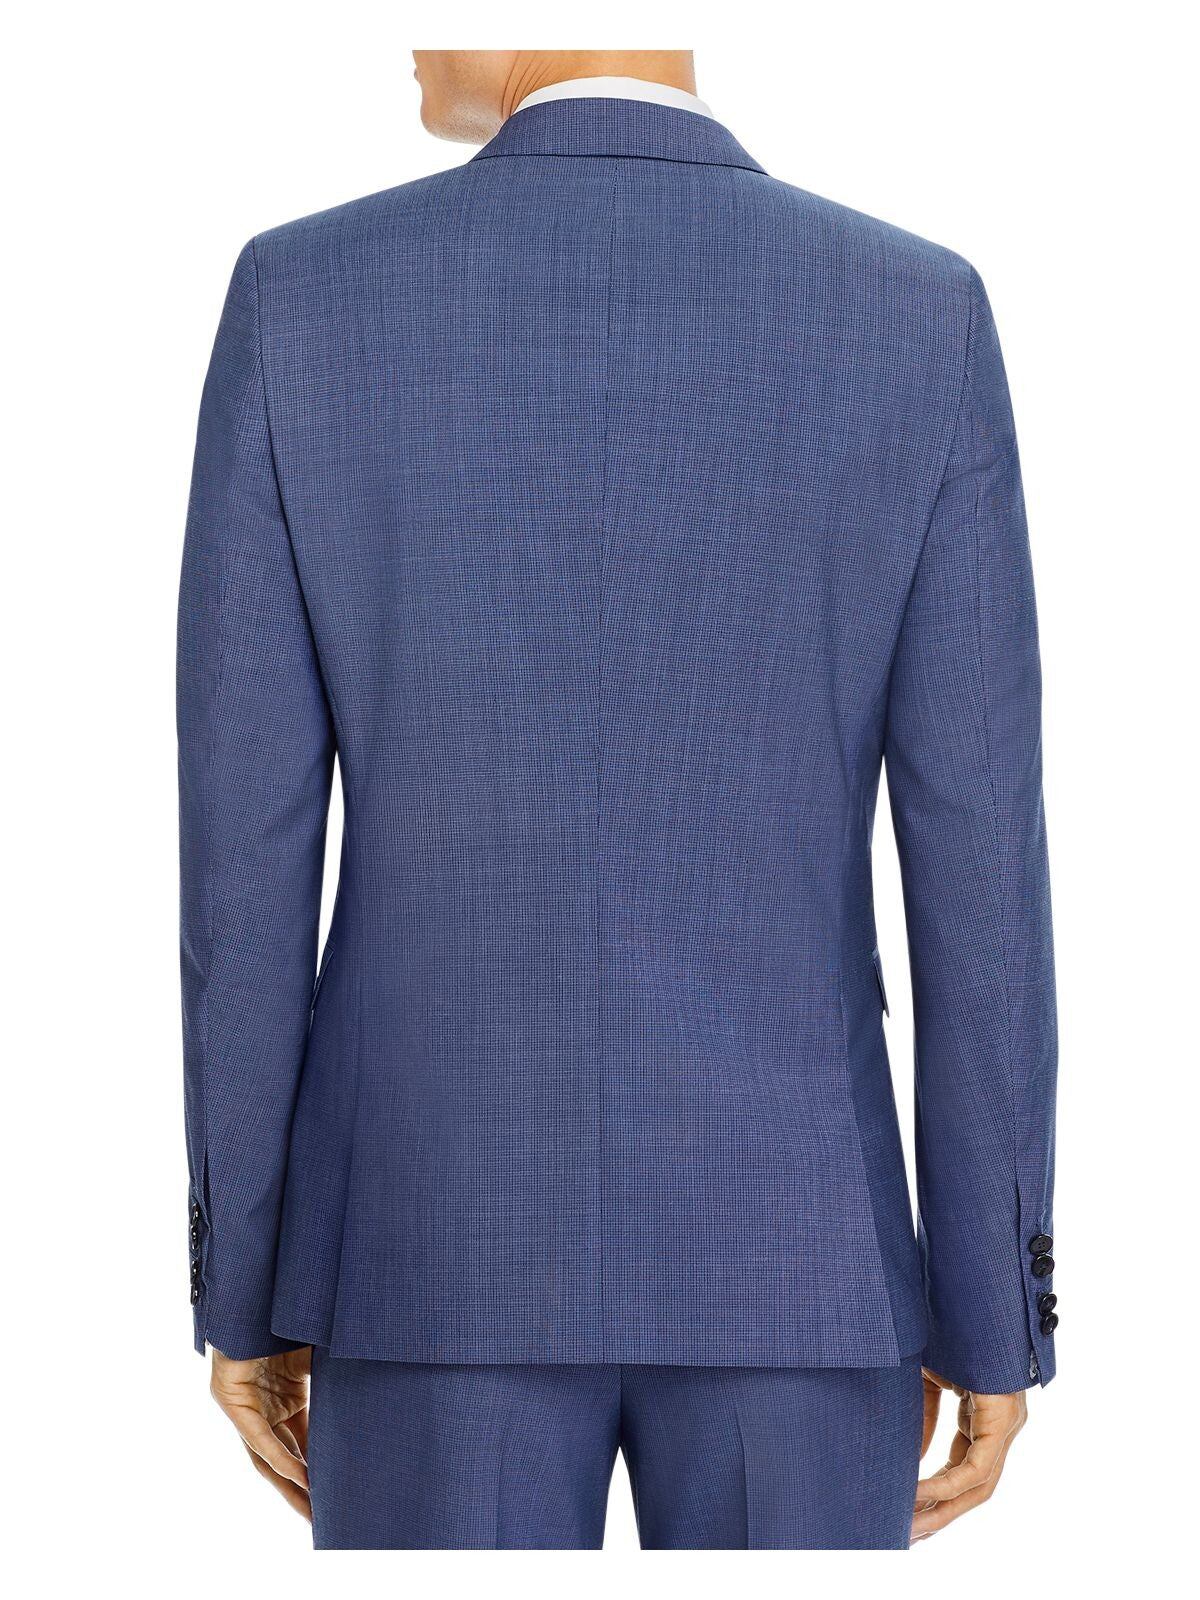 HUGO BOSS Mens Blue Single Breasted, Wool Blend Suit Jacket 40R